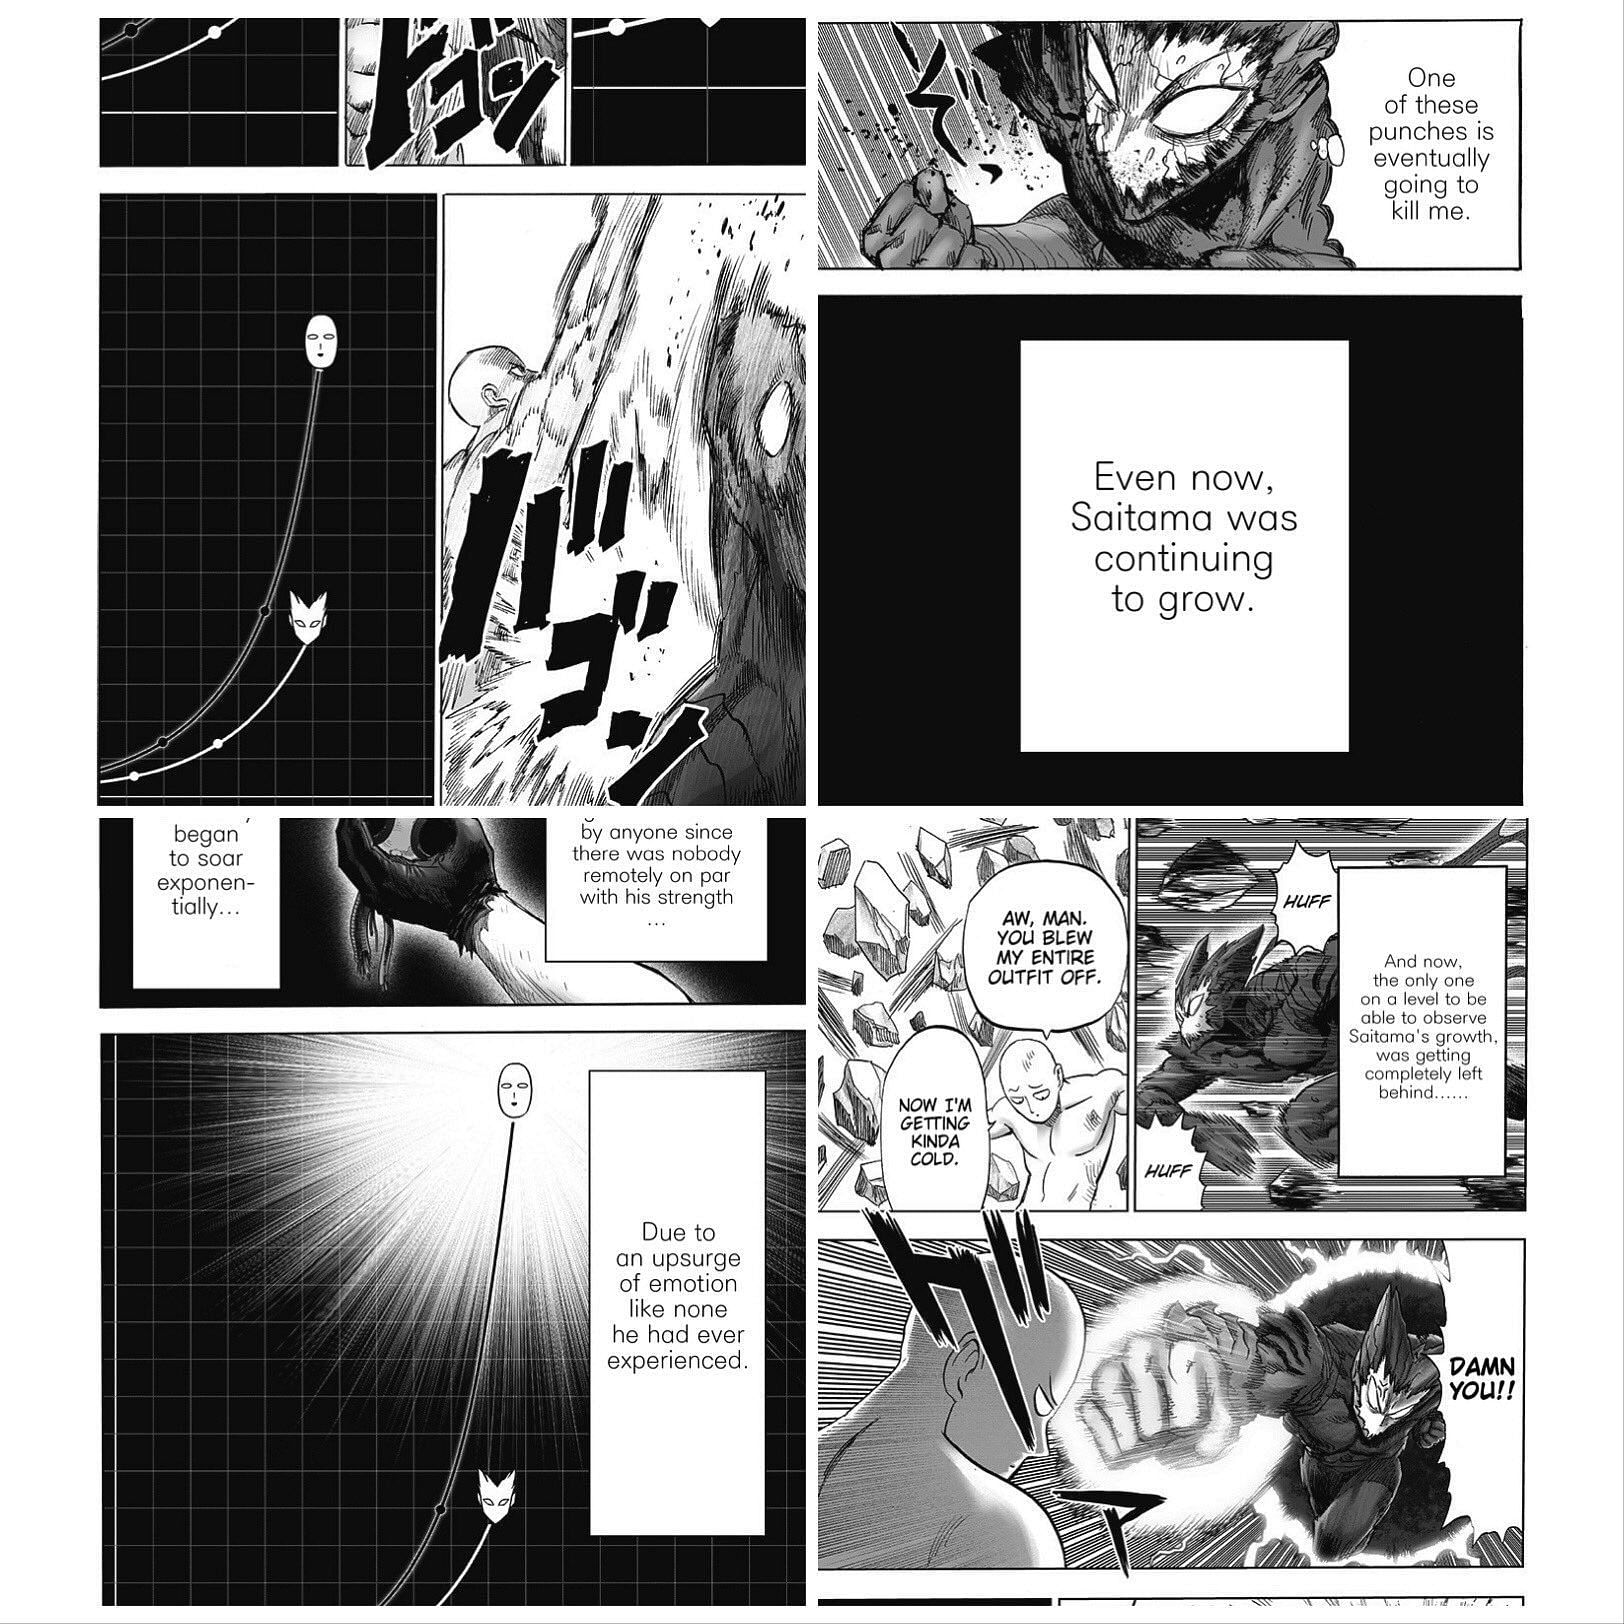 One Punch Man manga panels explaining Saitama&#039;s infinite potential and constant growth (Image via Shueisha)